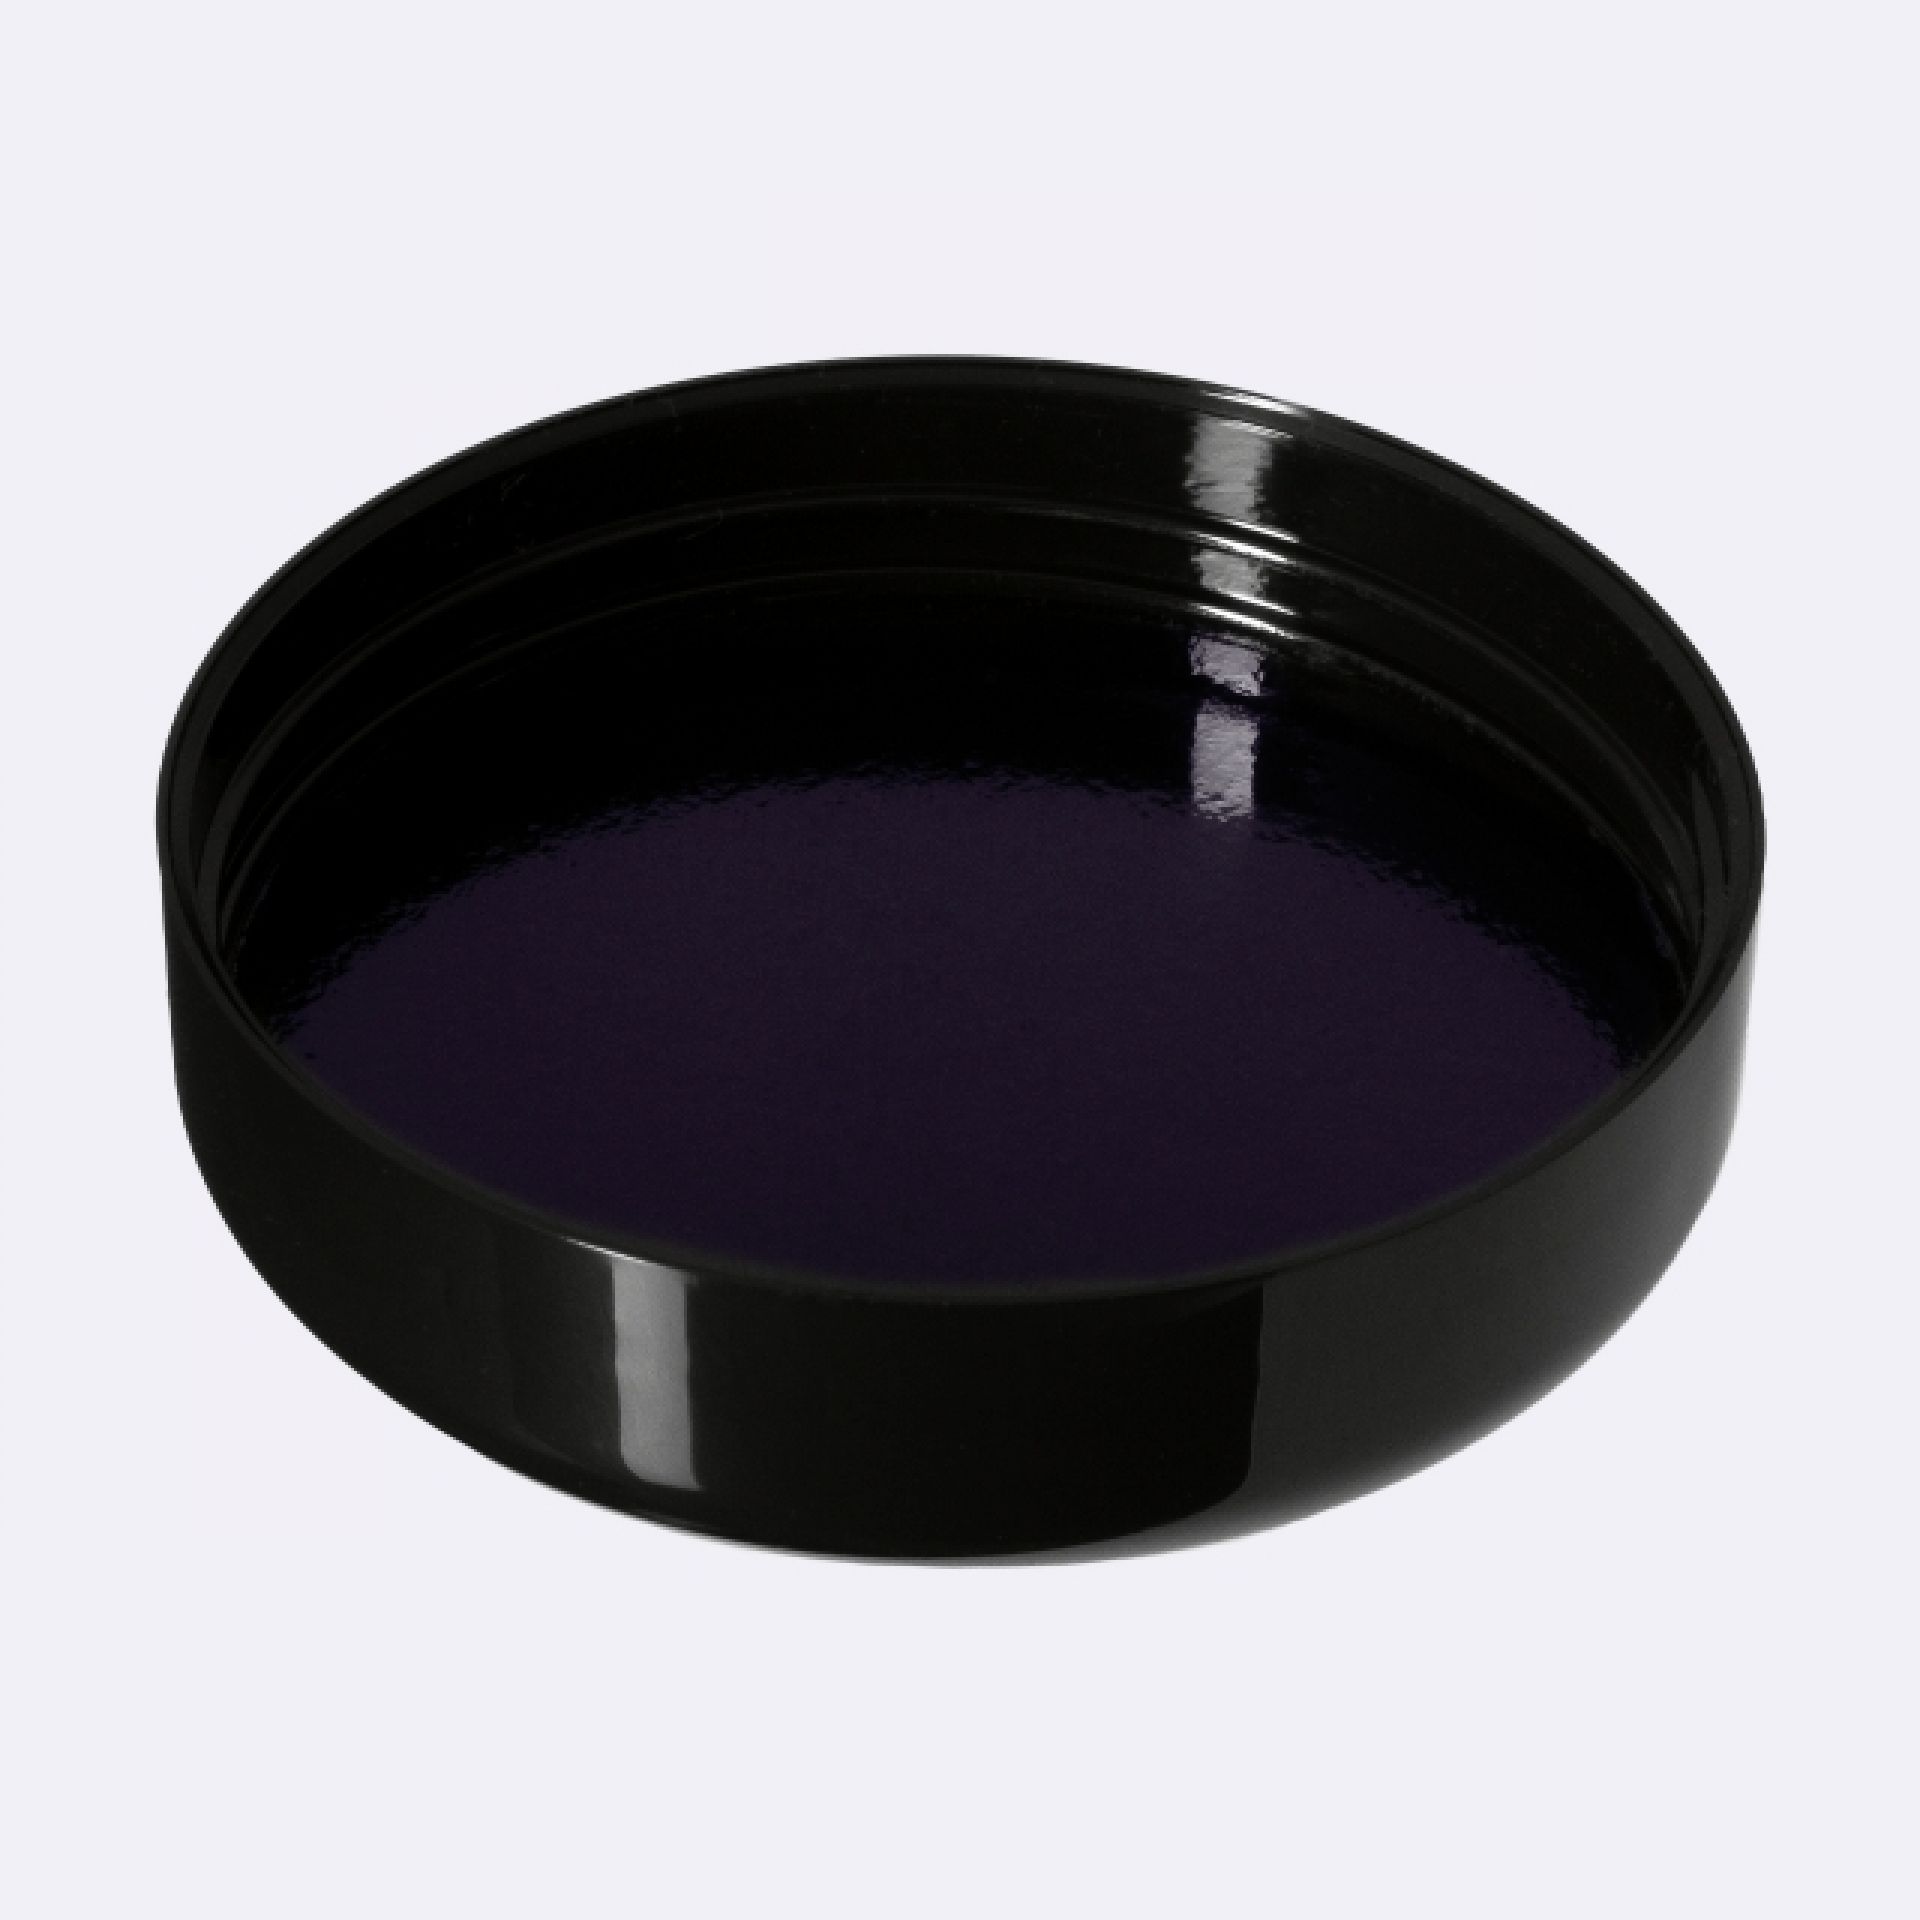 Lid Classic 70/400, SAN, black, glossy finish, violet Phan inlay (Saturn 250/400)